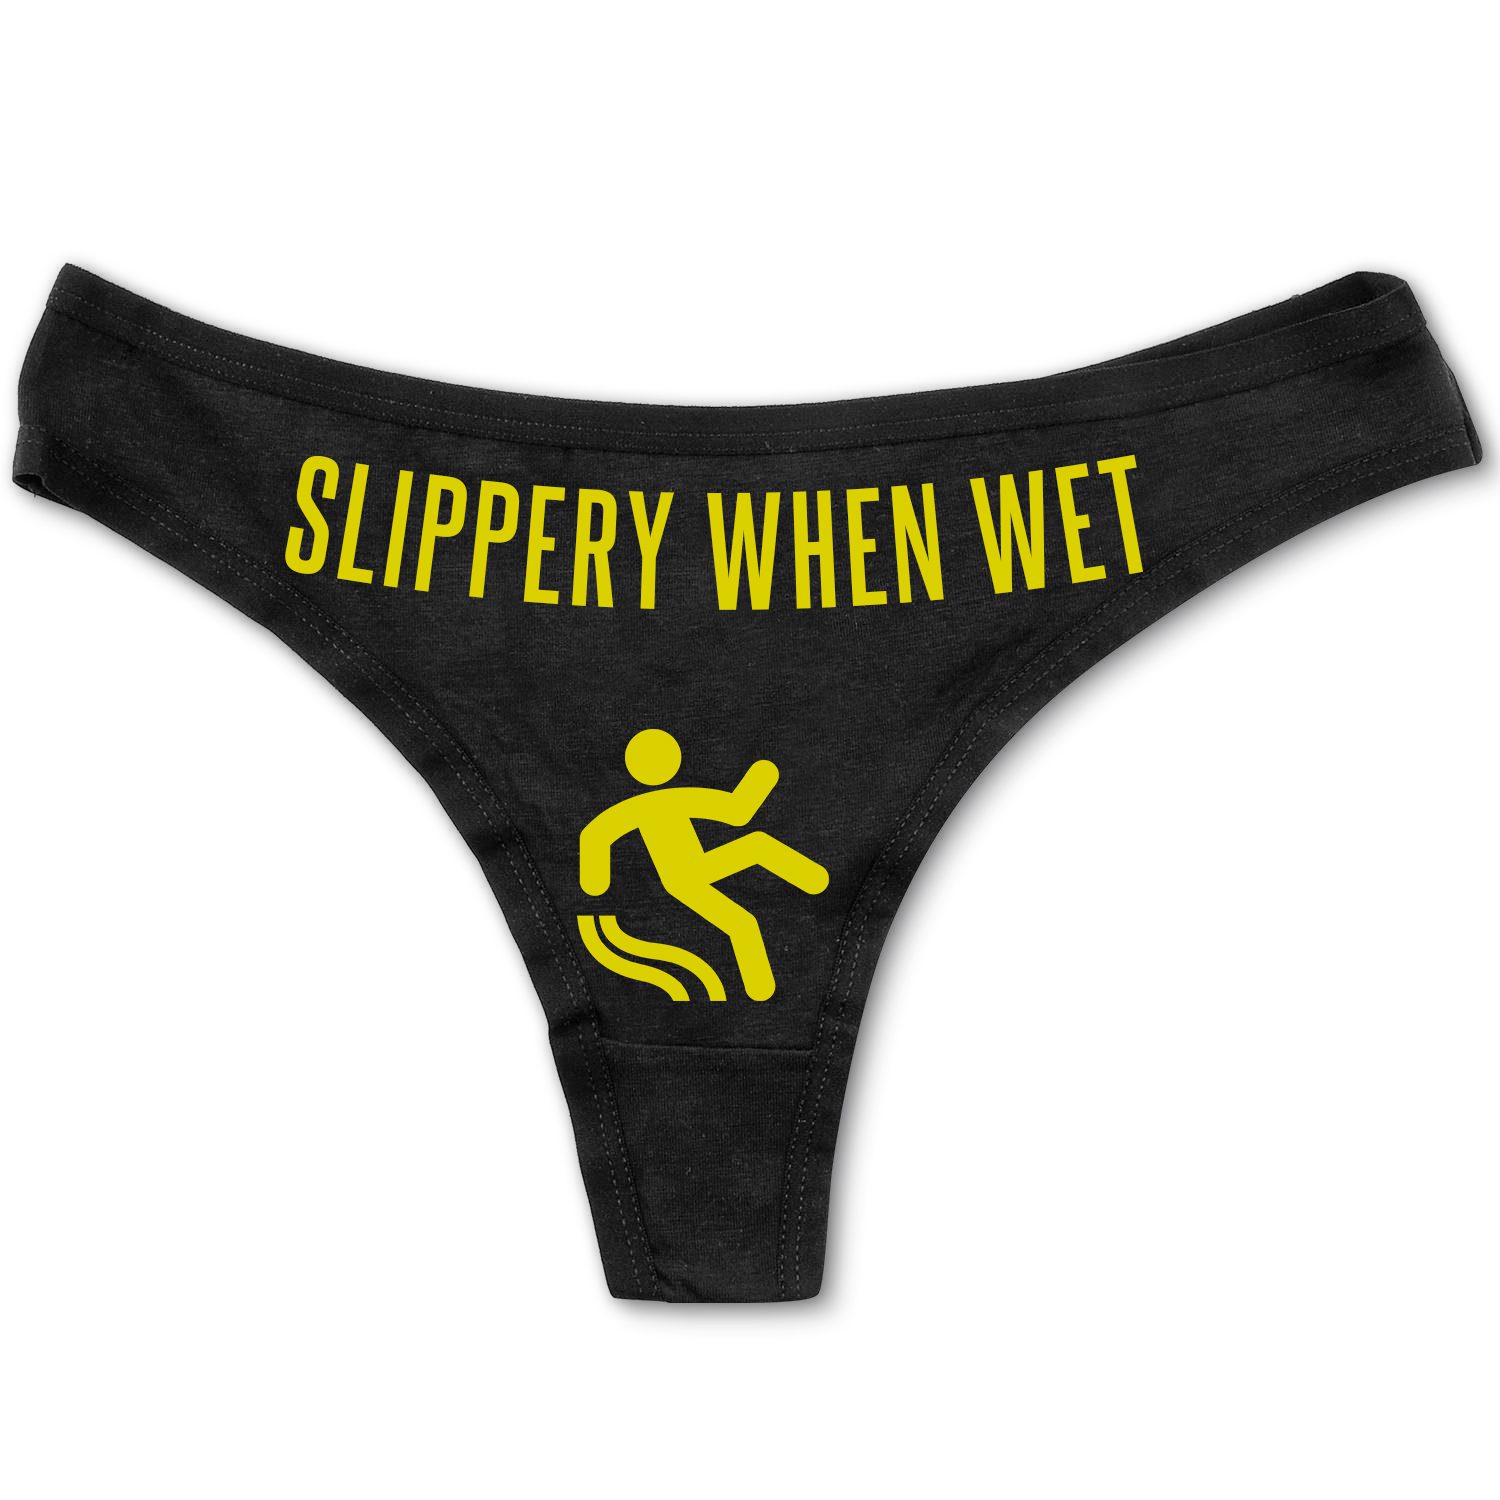 Slippery When Wet Panties.